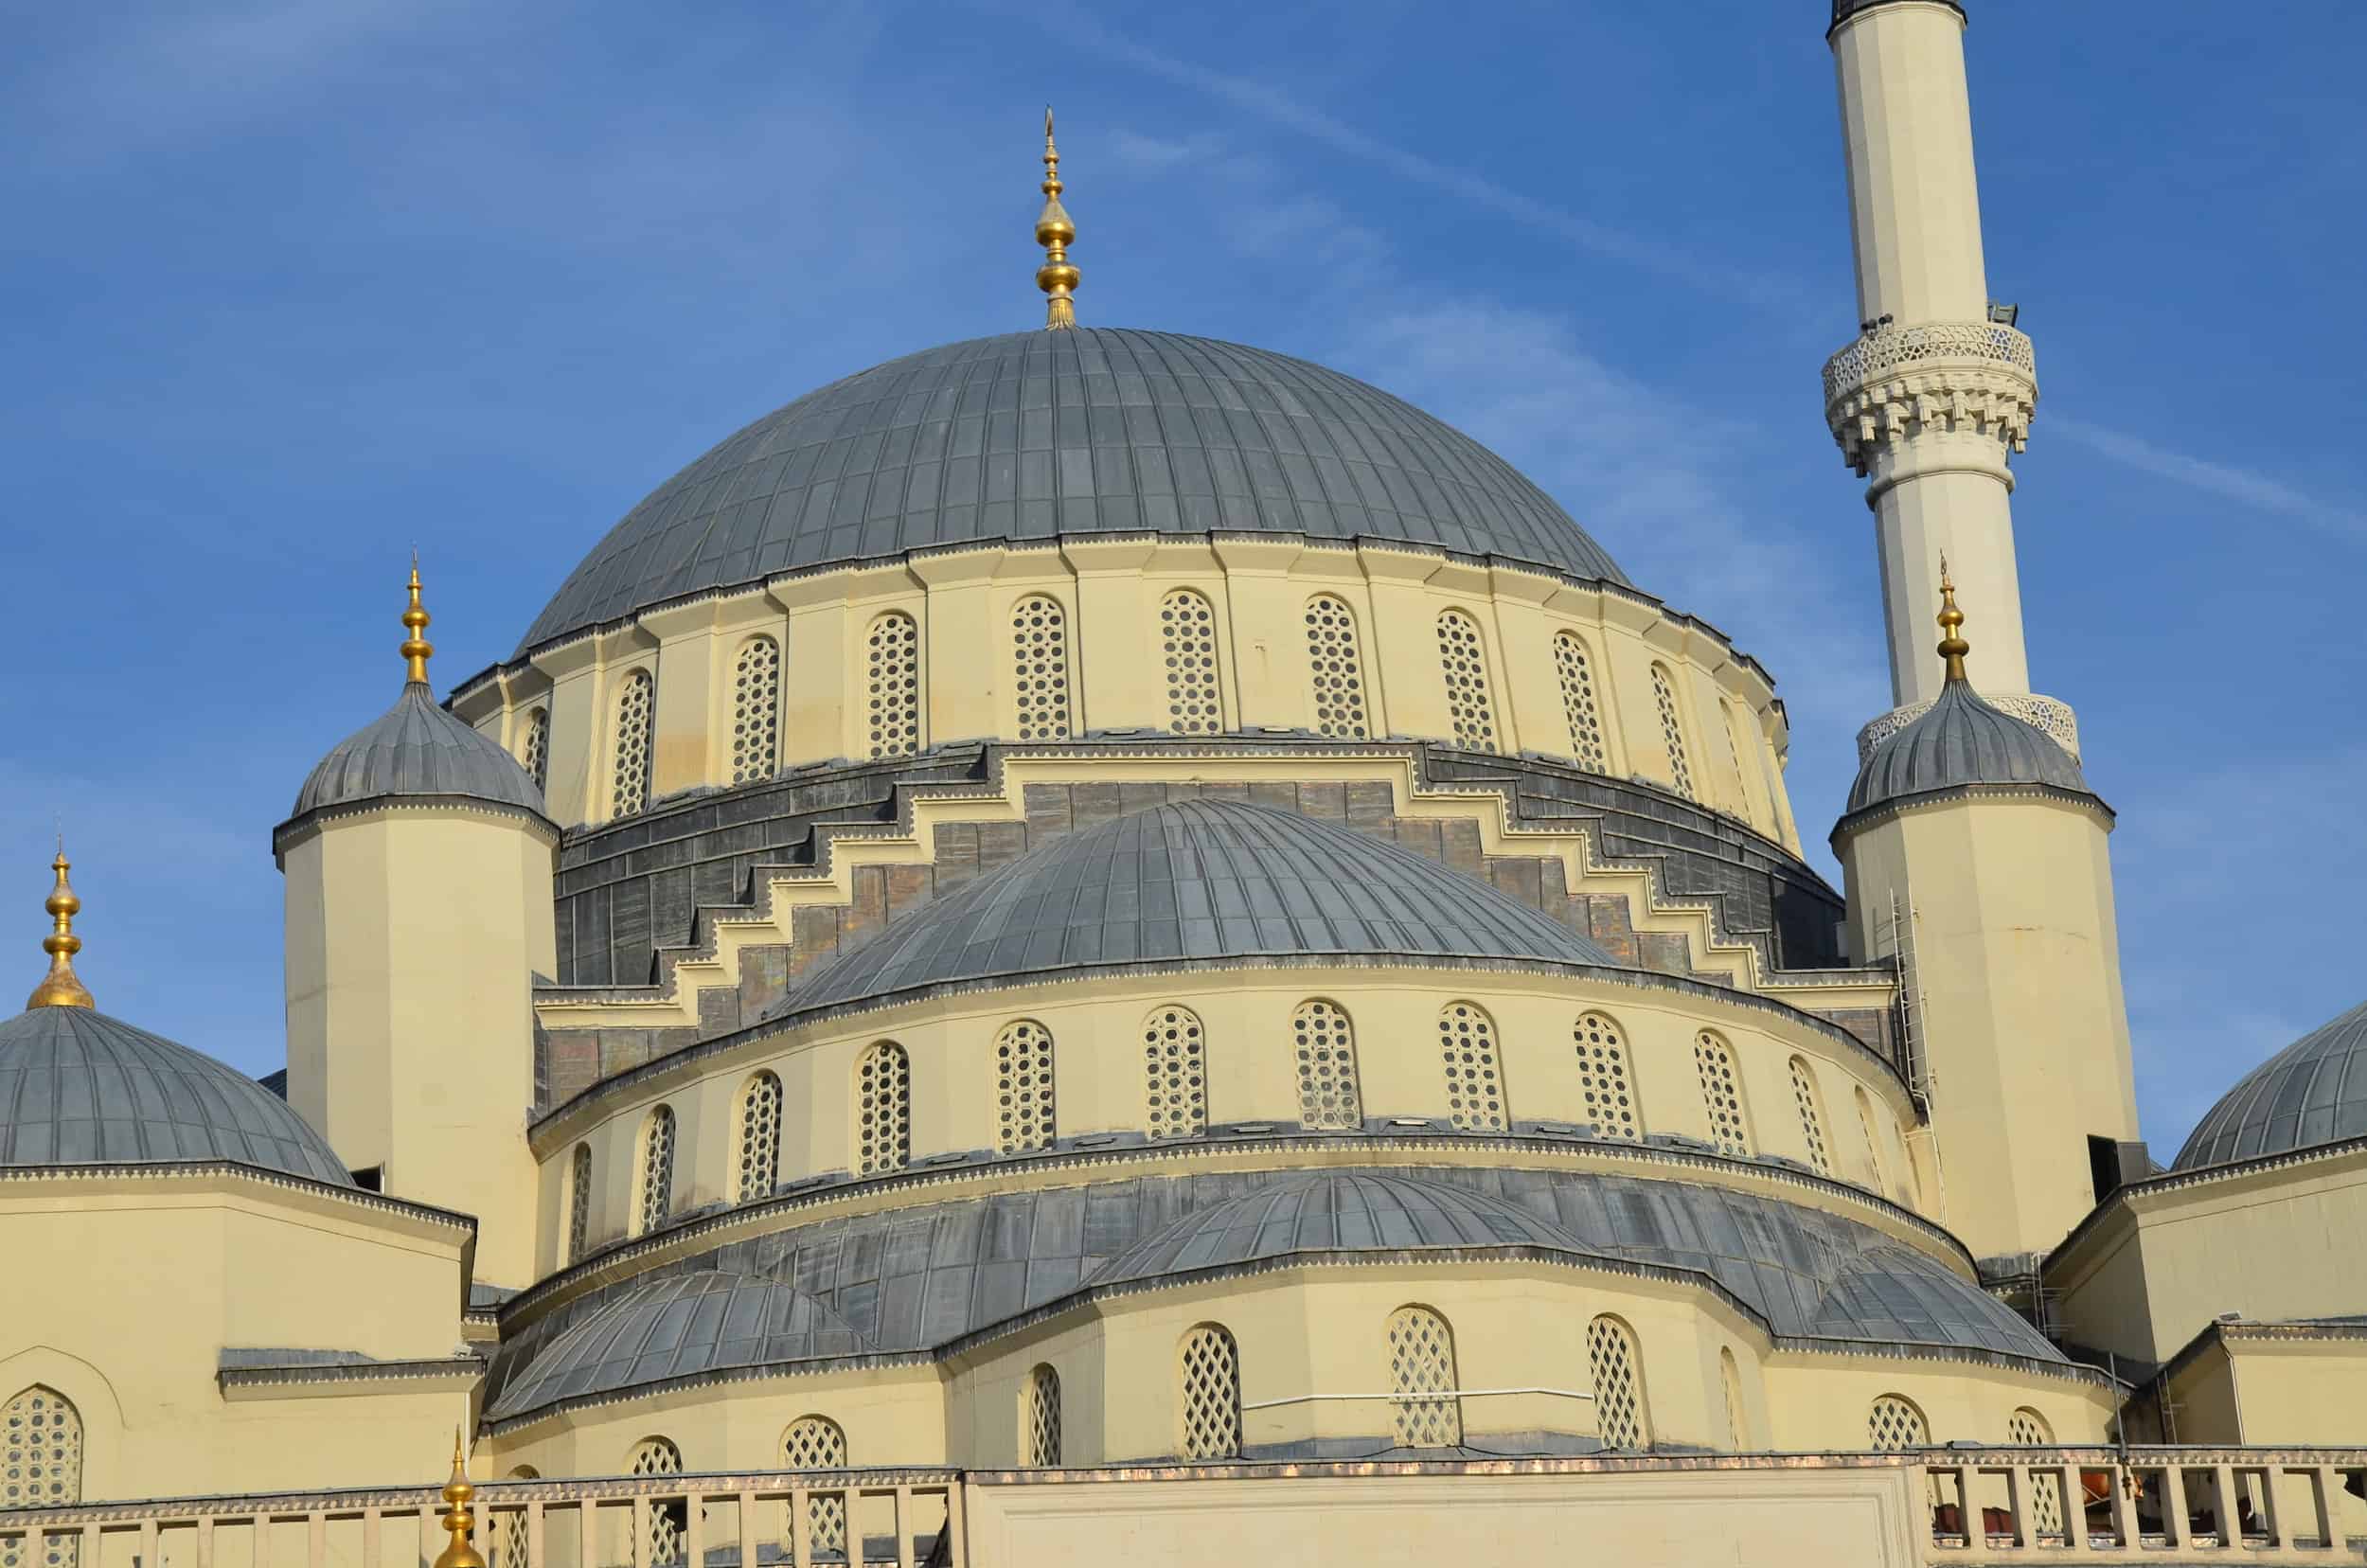 Dome of the Kocatepe Mosque in Kızılay, Ankara, Turkey